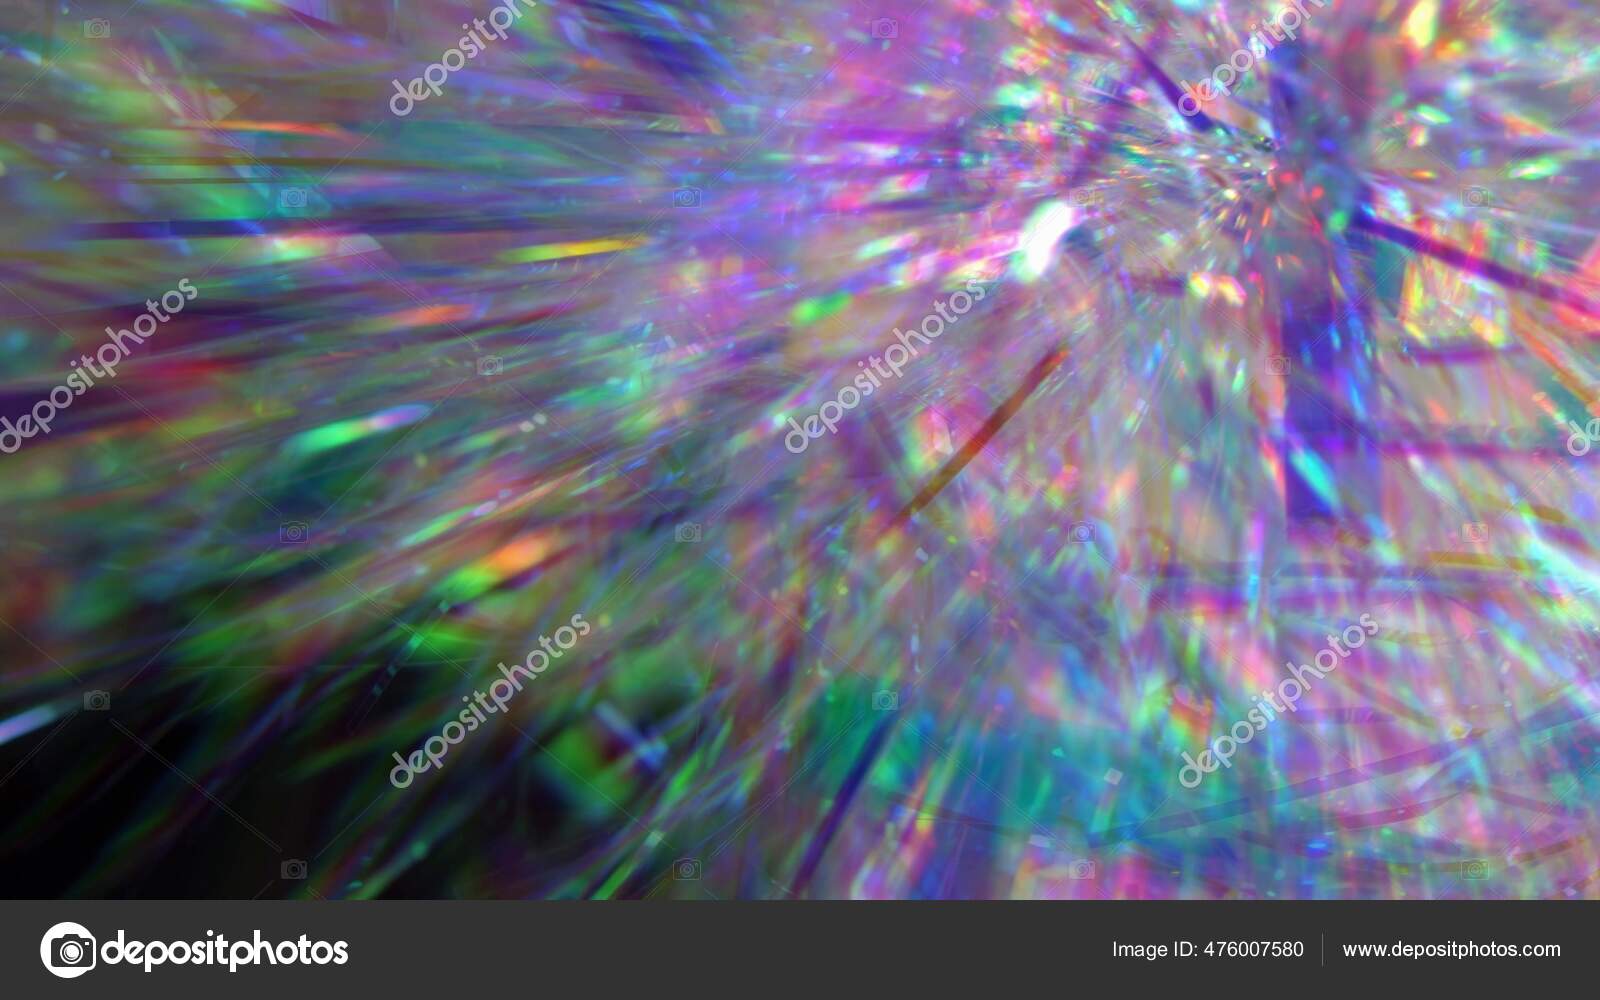 https://st2.depositphotos.com/16823926/47600/i/1600/depositphotos_476007580-stock-photo-crystal-prism-refracting-light-in.jpg